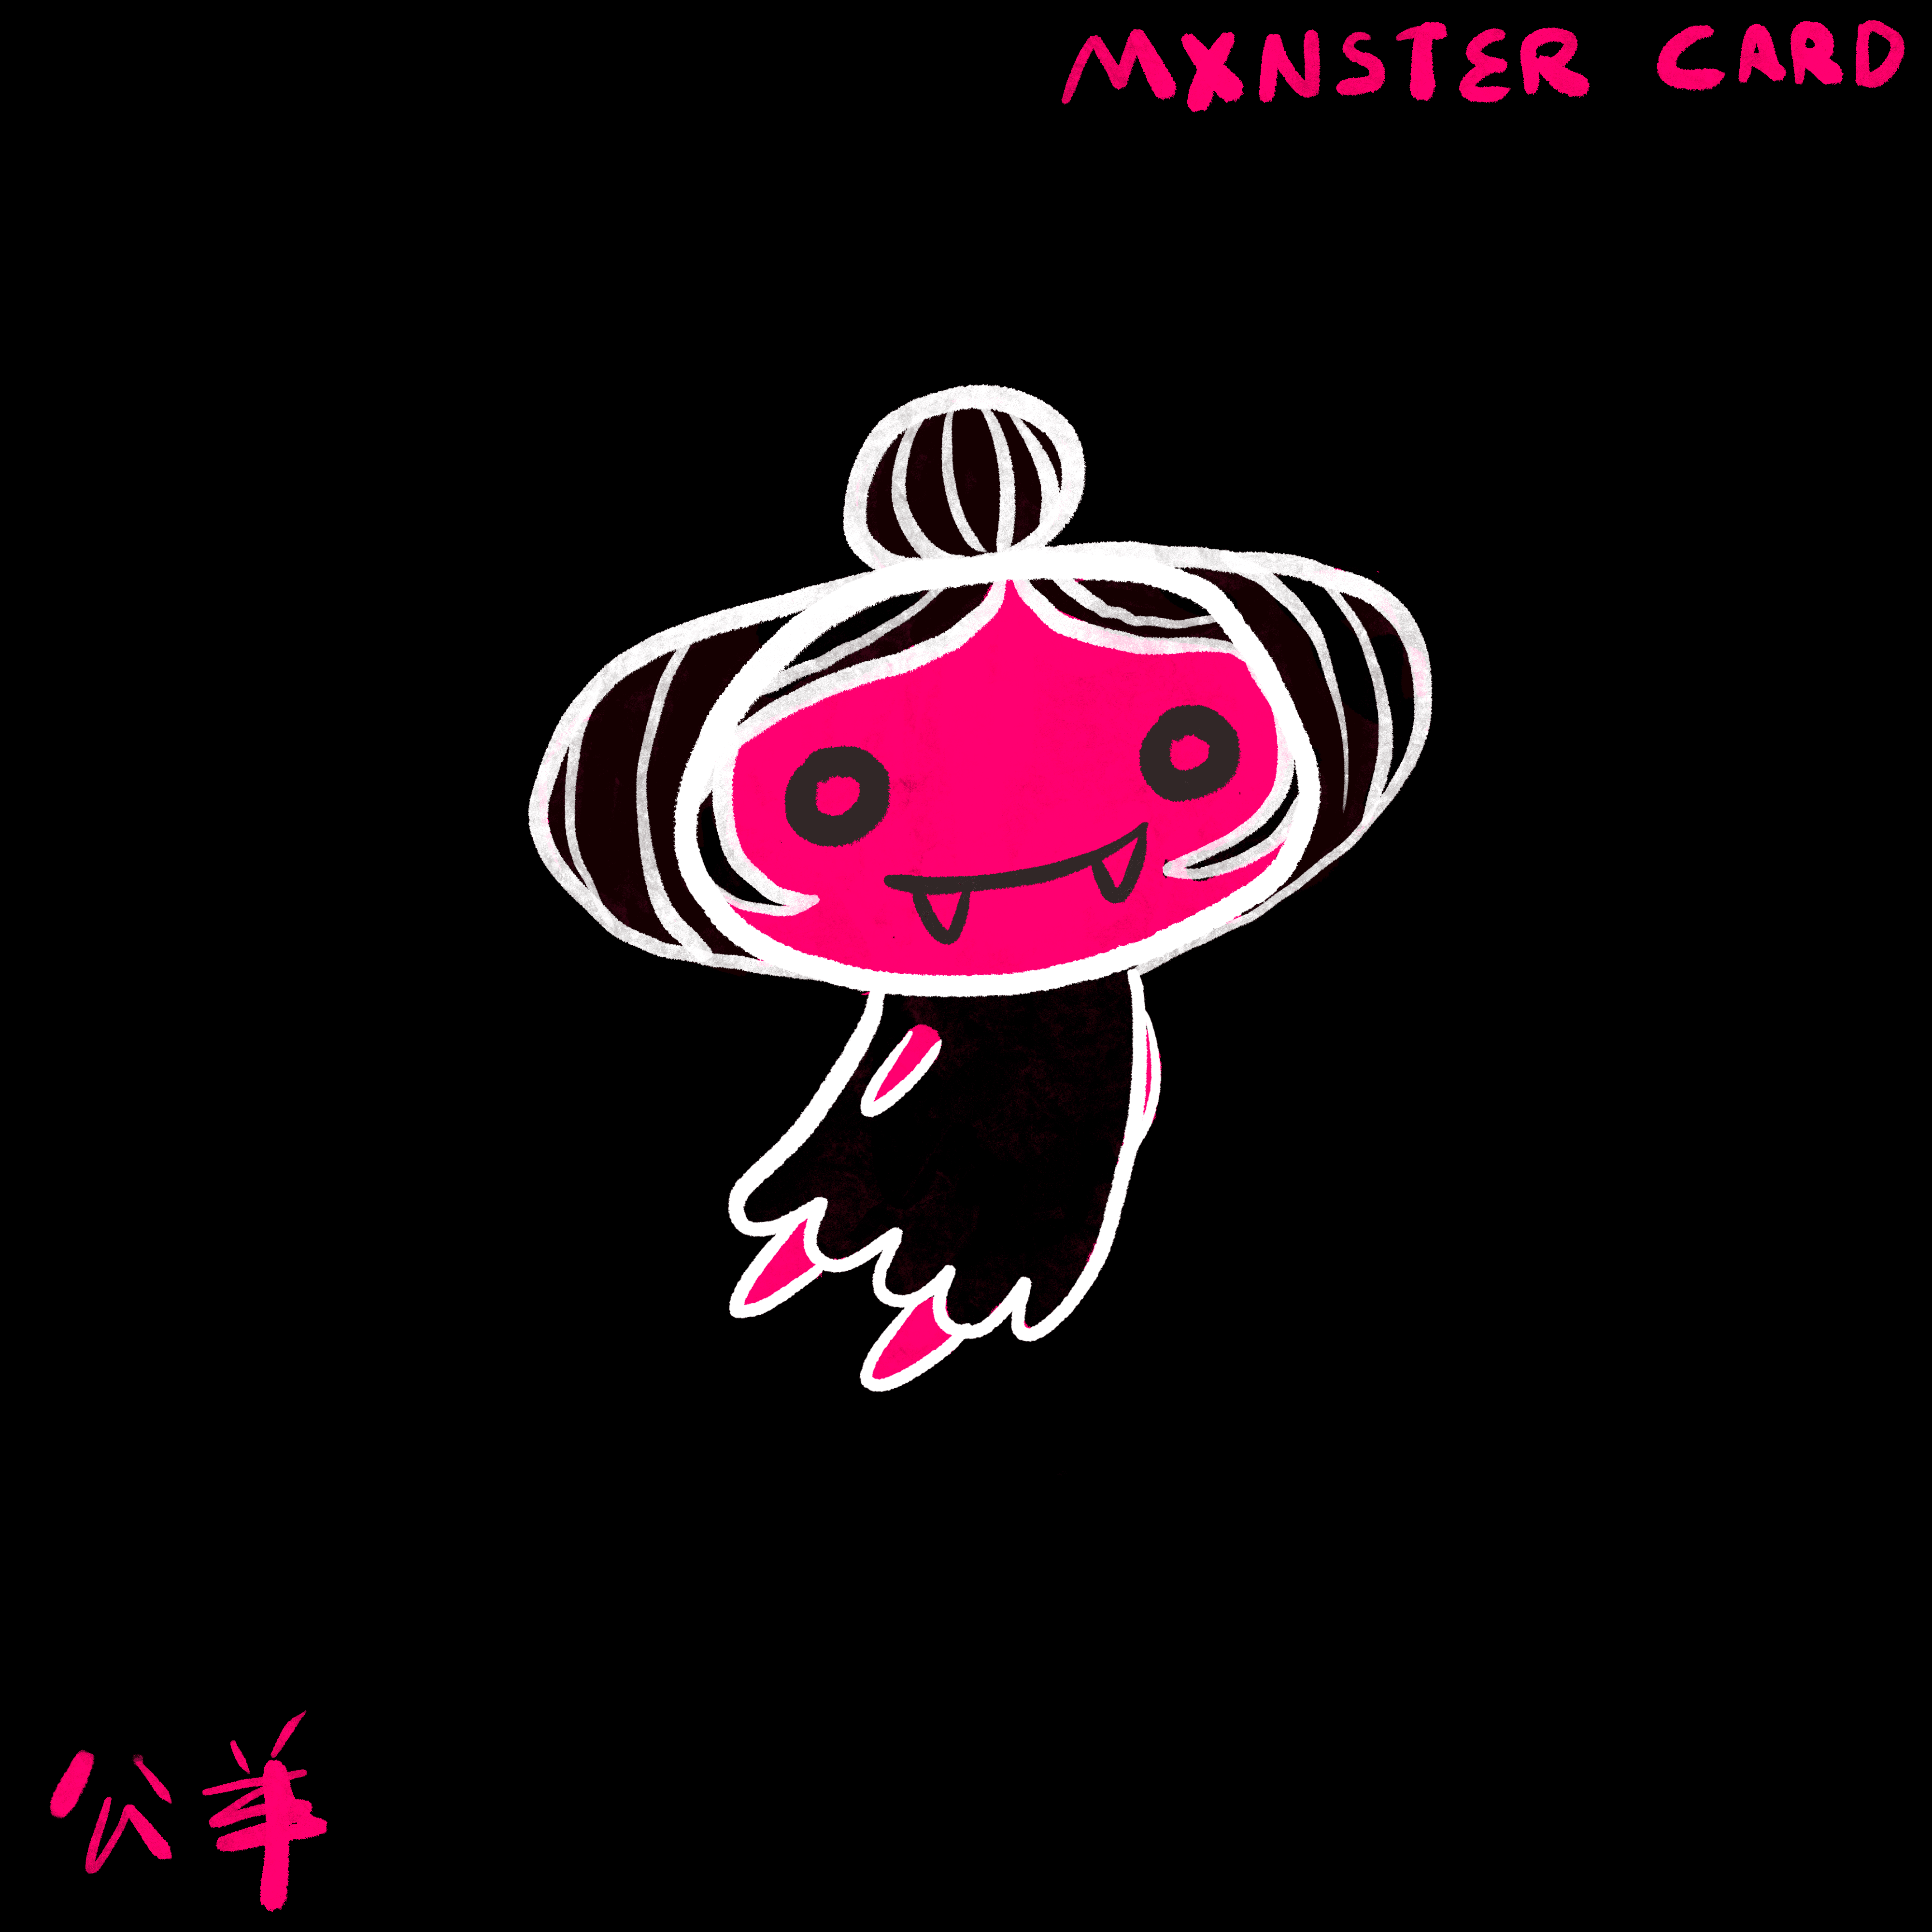 Mxnster Card 22